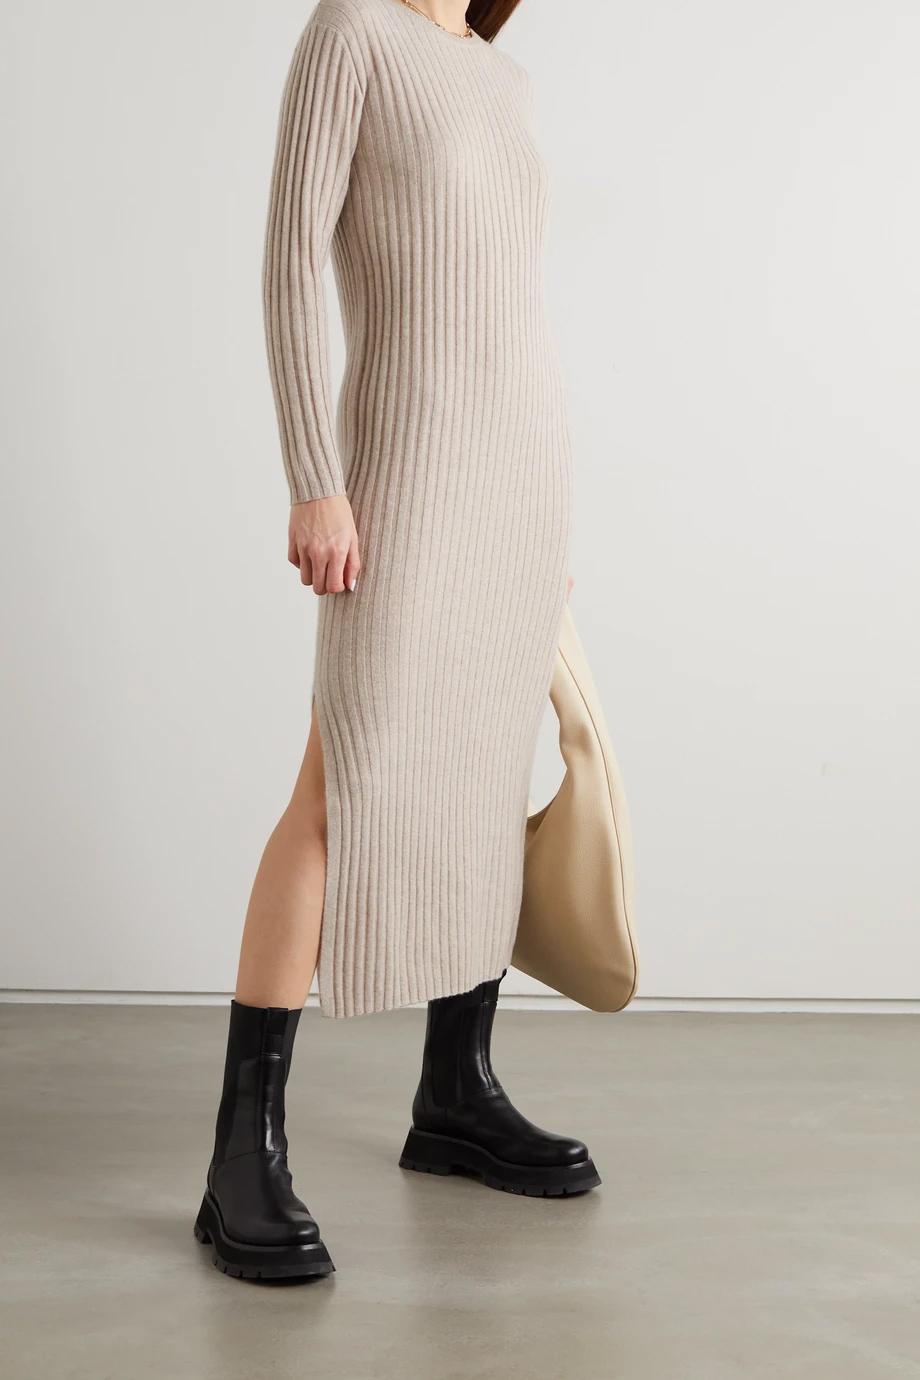 Lisa Lang pulover haljina 2021.